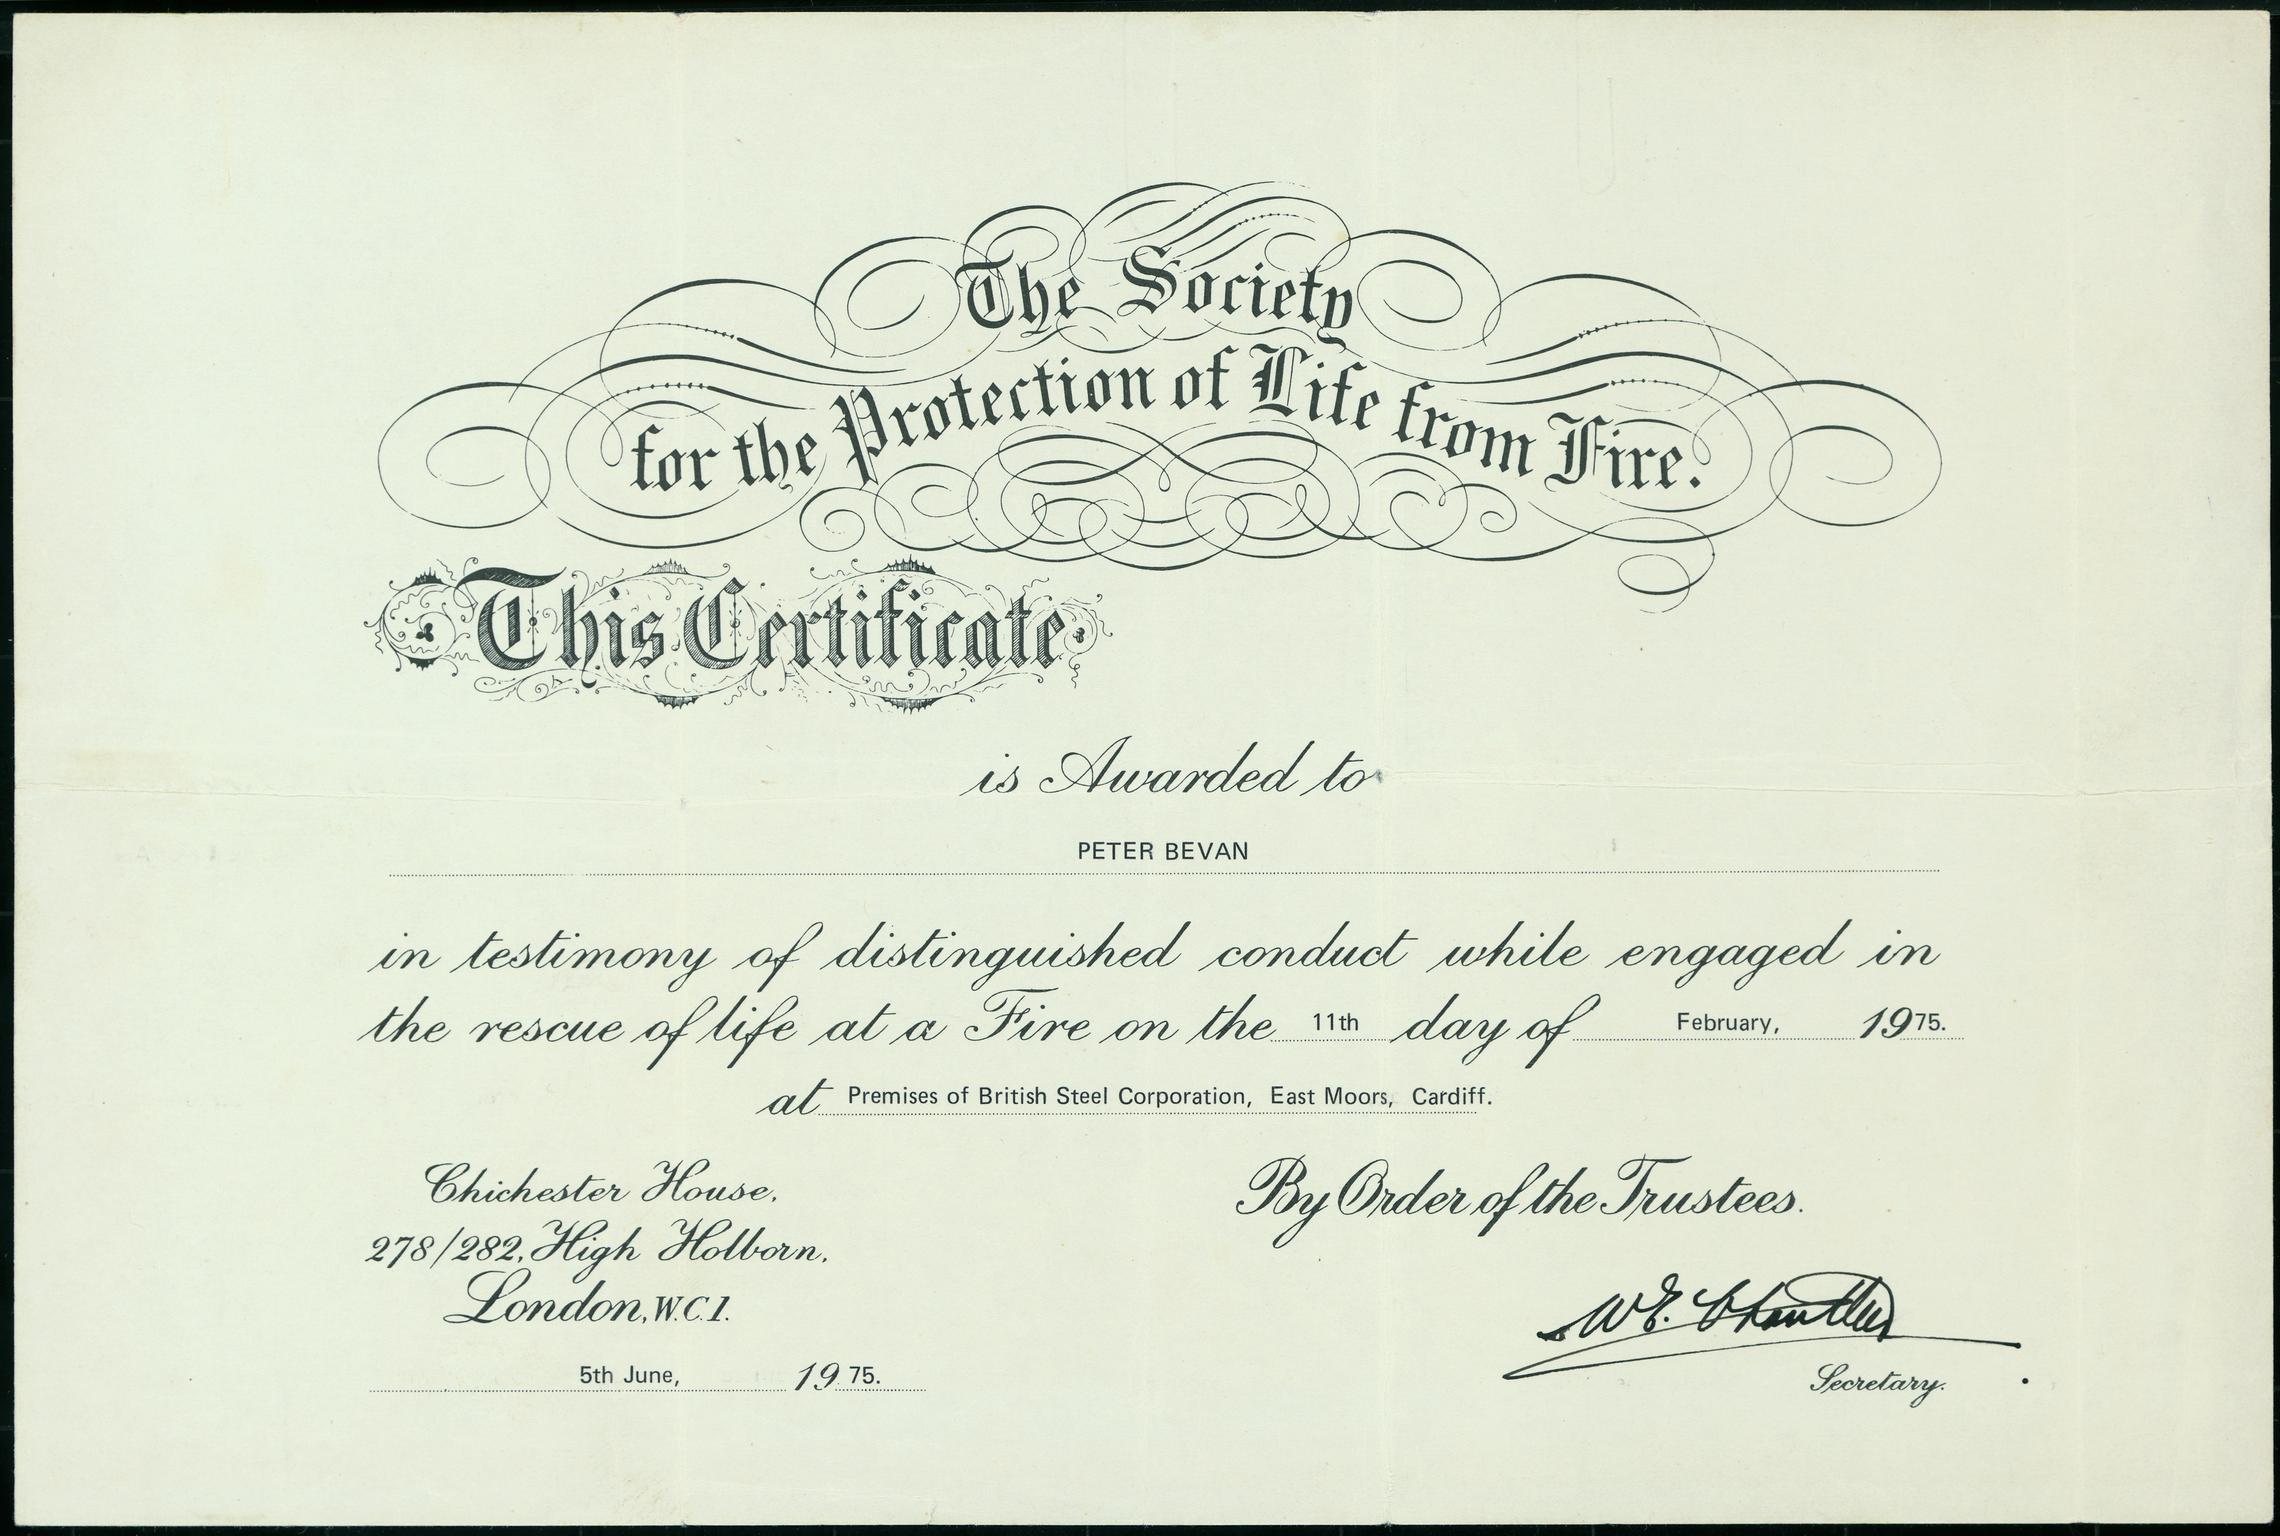 Certificate awarded to Peter Bevan